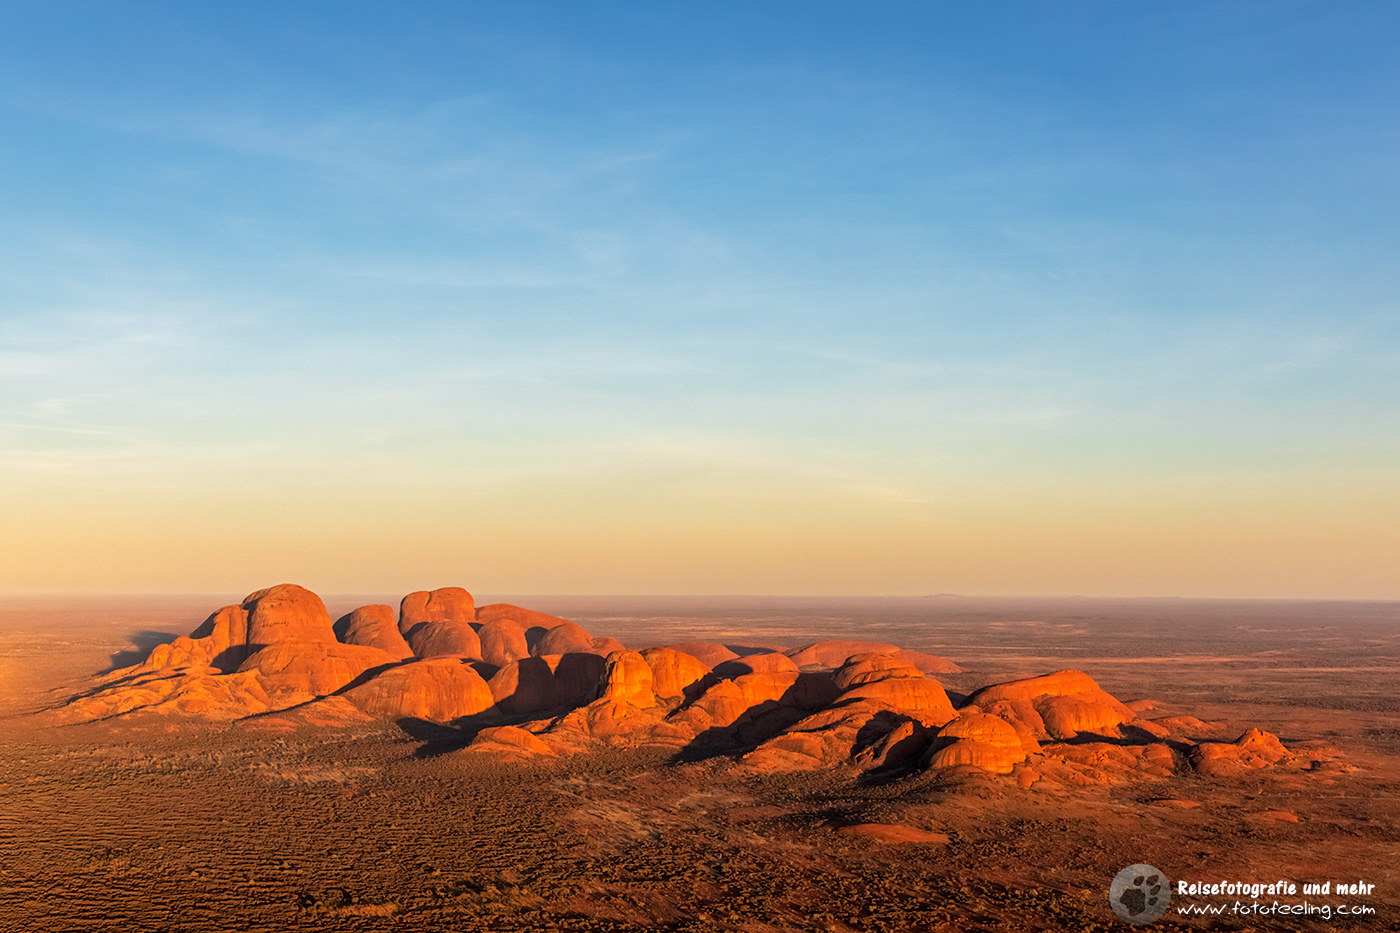 Kata Tjuta (Olgas), Hubschrauberflug über den Uluru-Kata Tjuta National Park, Northern Territory, Australien